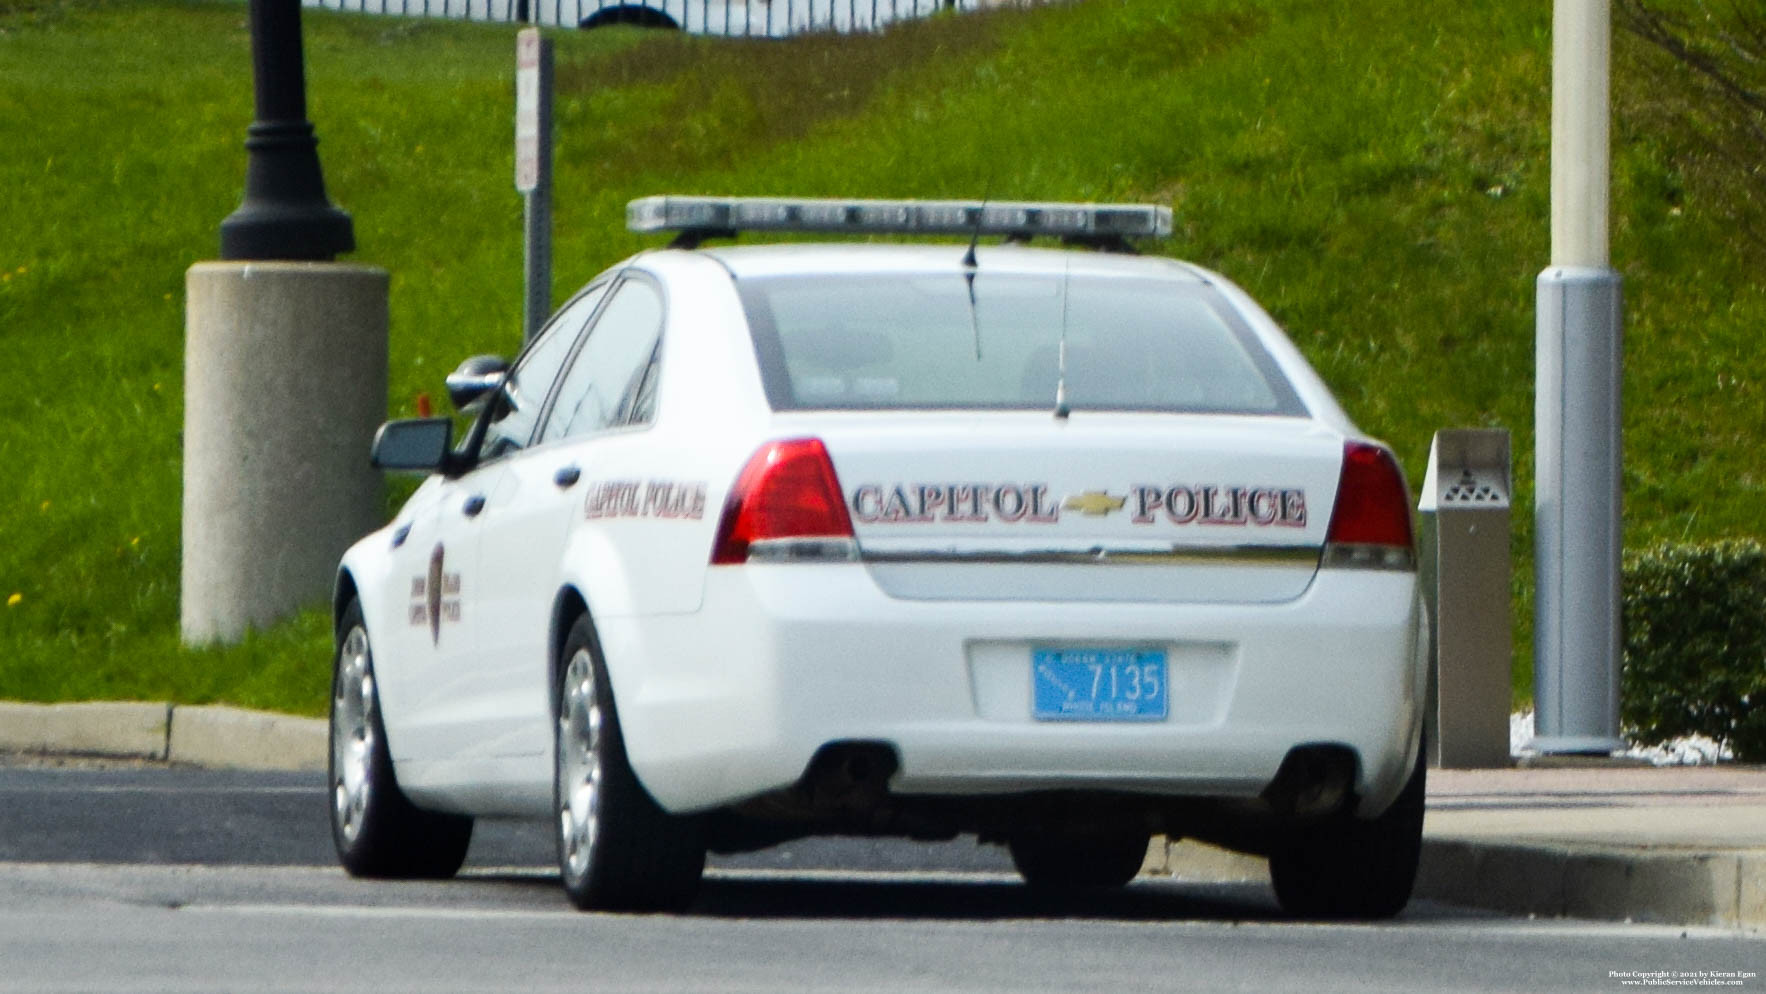 A photo  of Rhode Island Capitol Police
            Cruiser 7135, a 2014 Chevrolet Caprice             taken by Kieran Egan